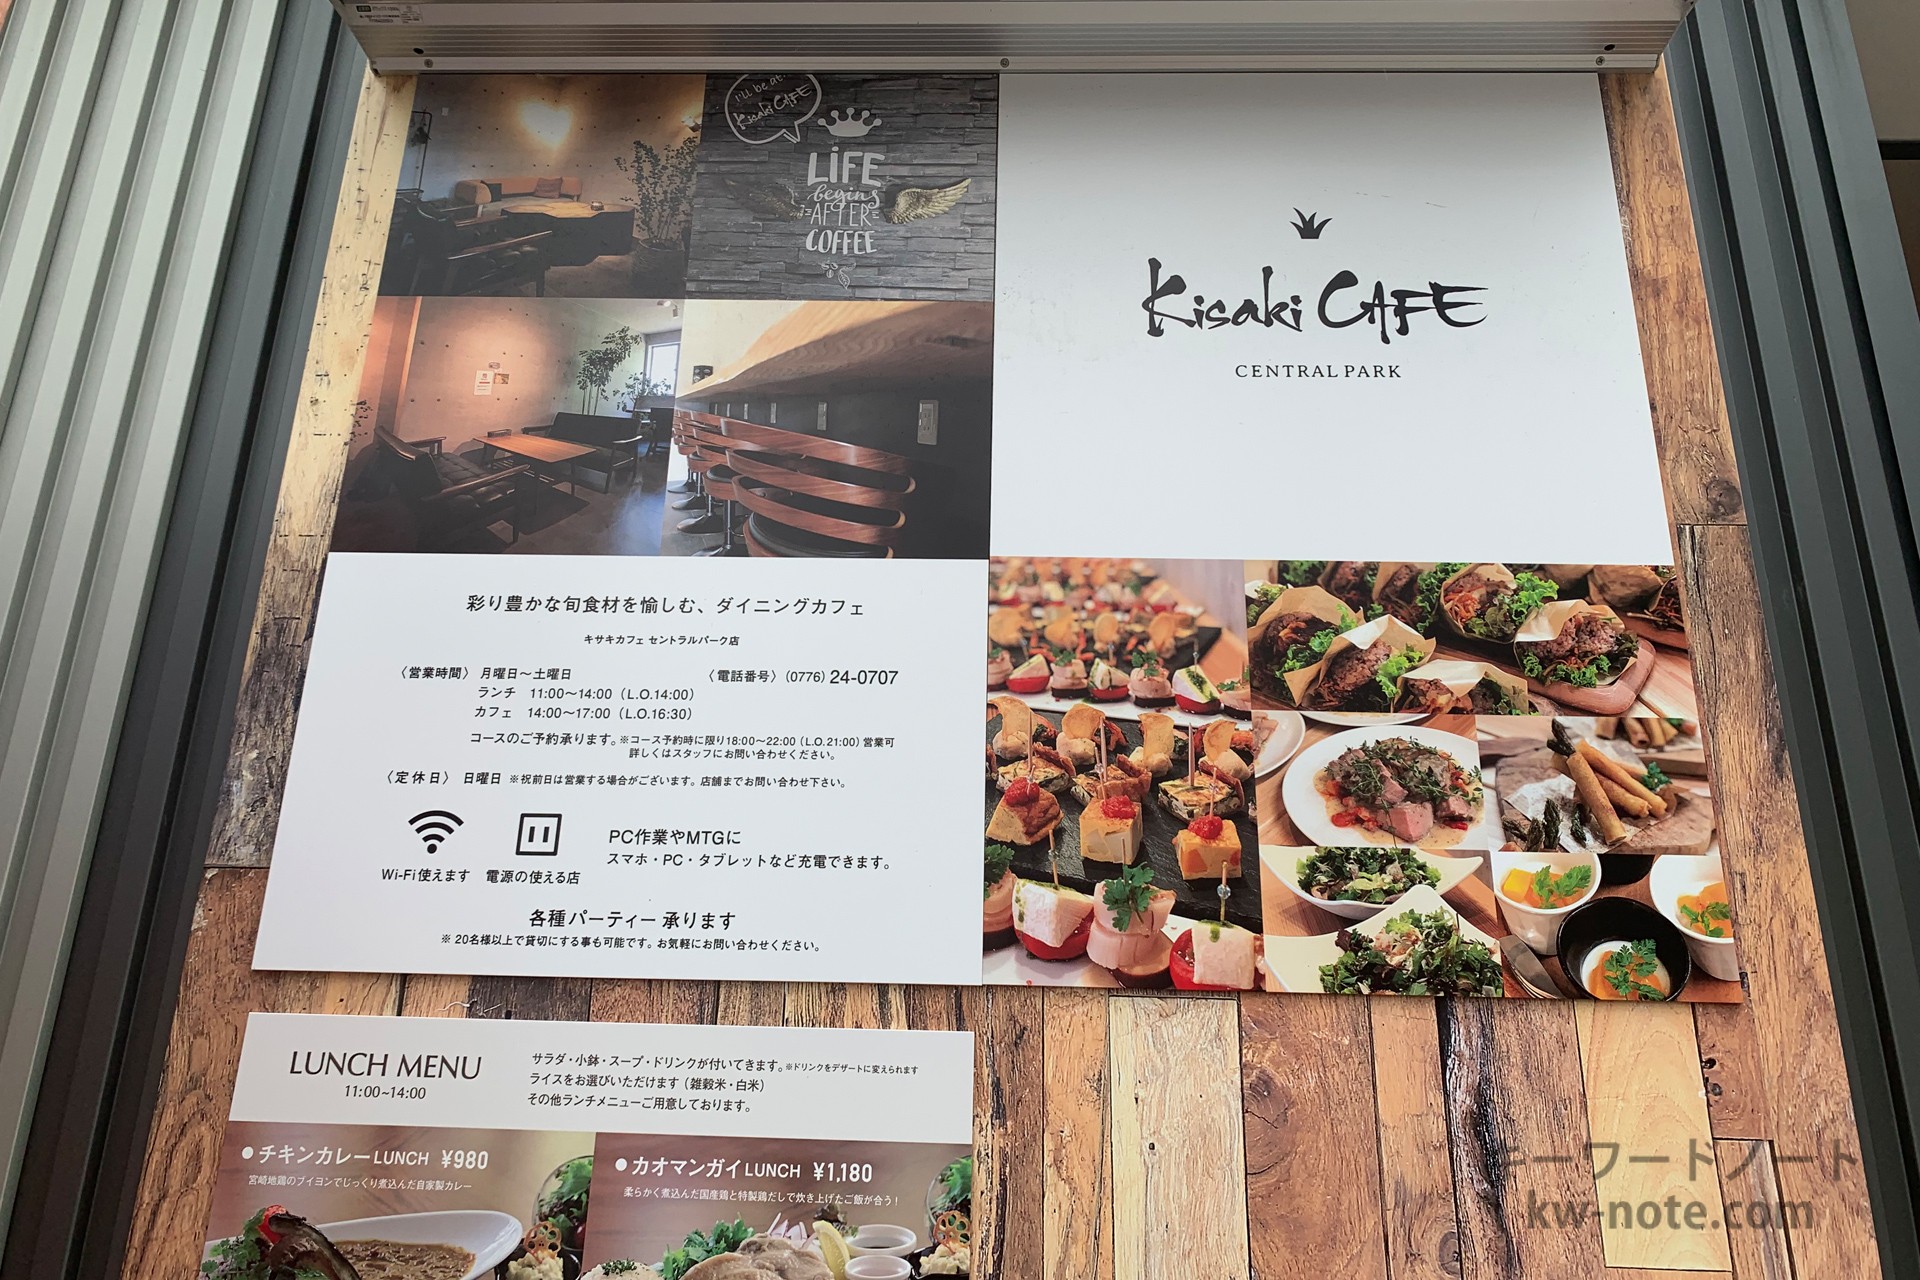 Kisaki CAFE CENTRALPARKの看板